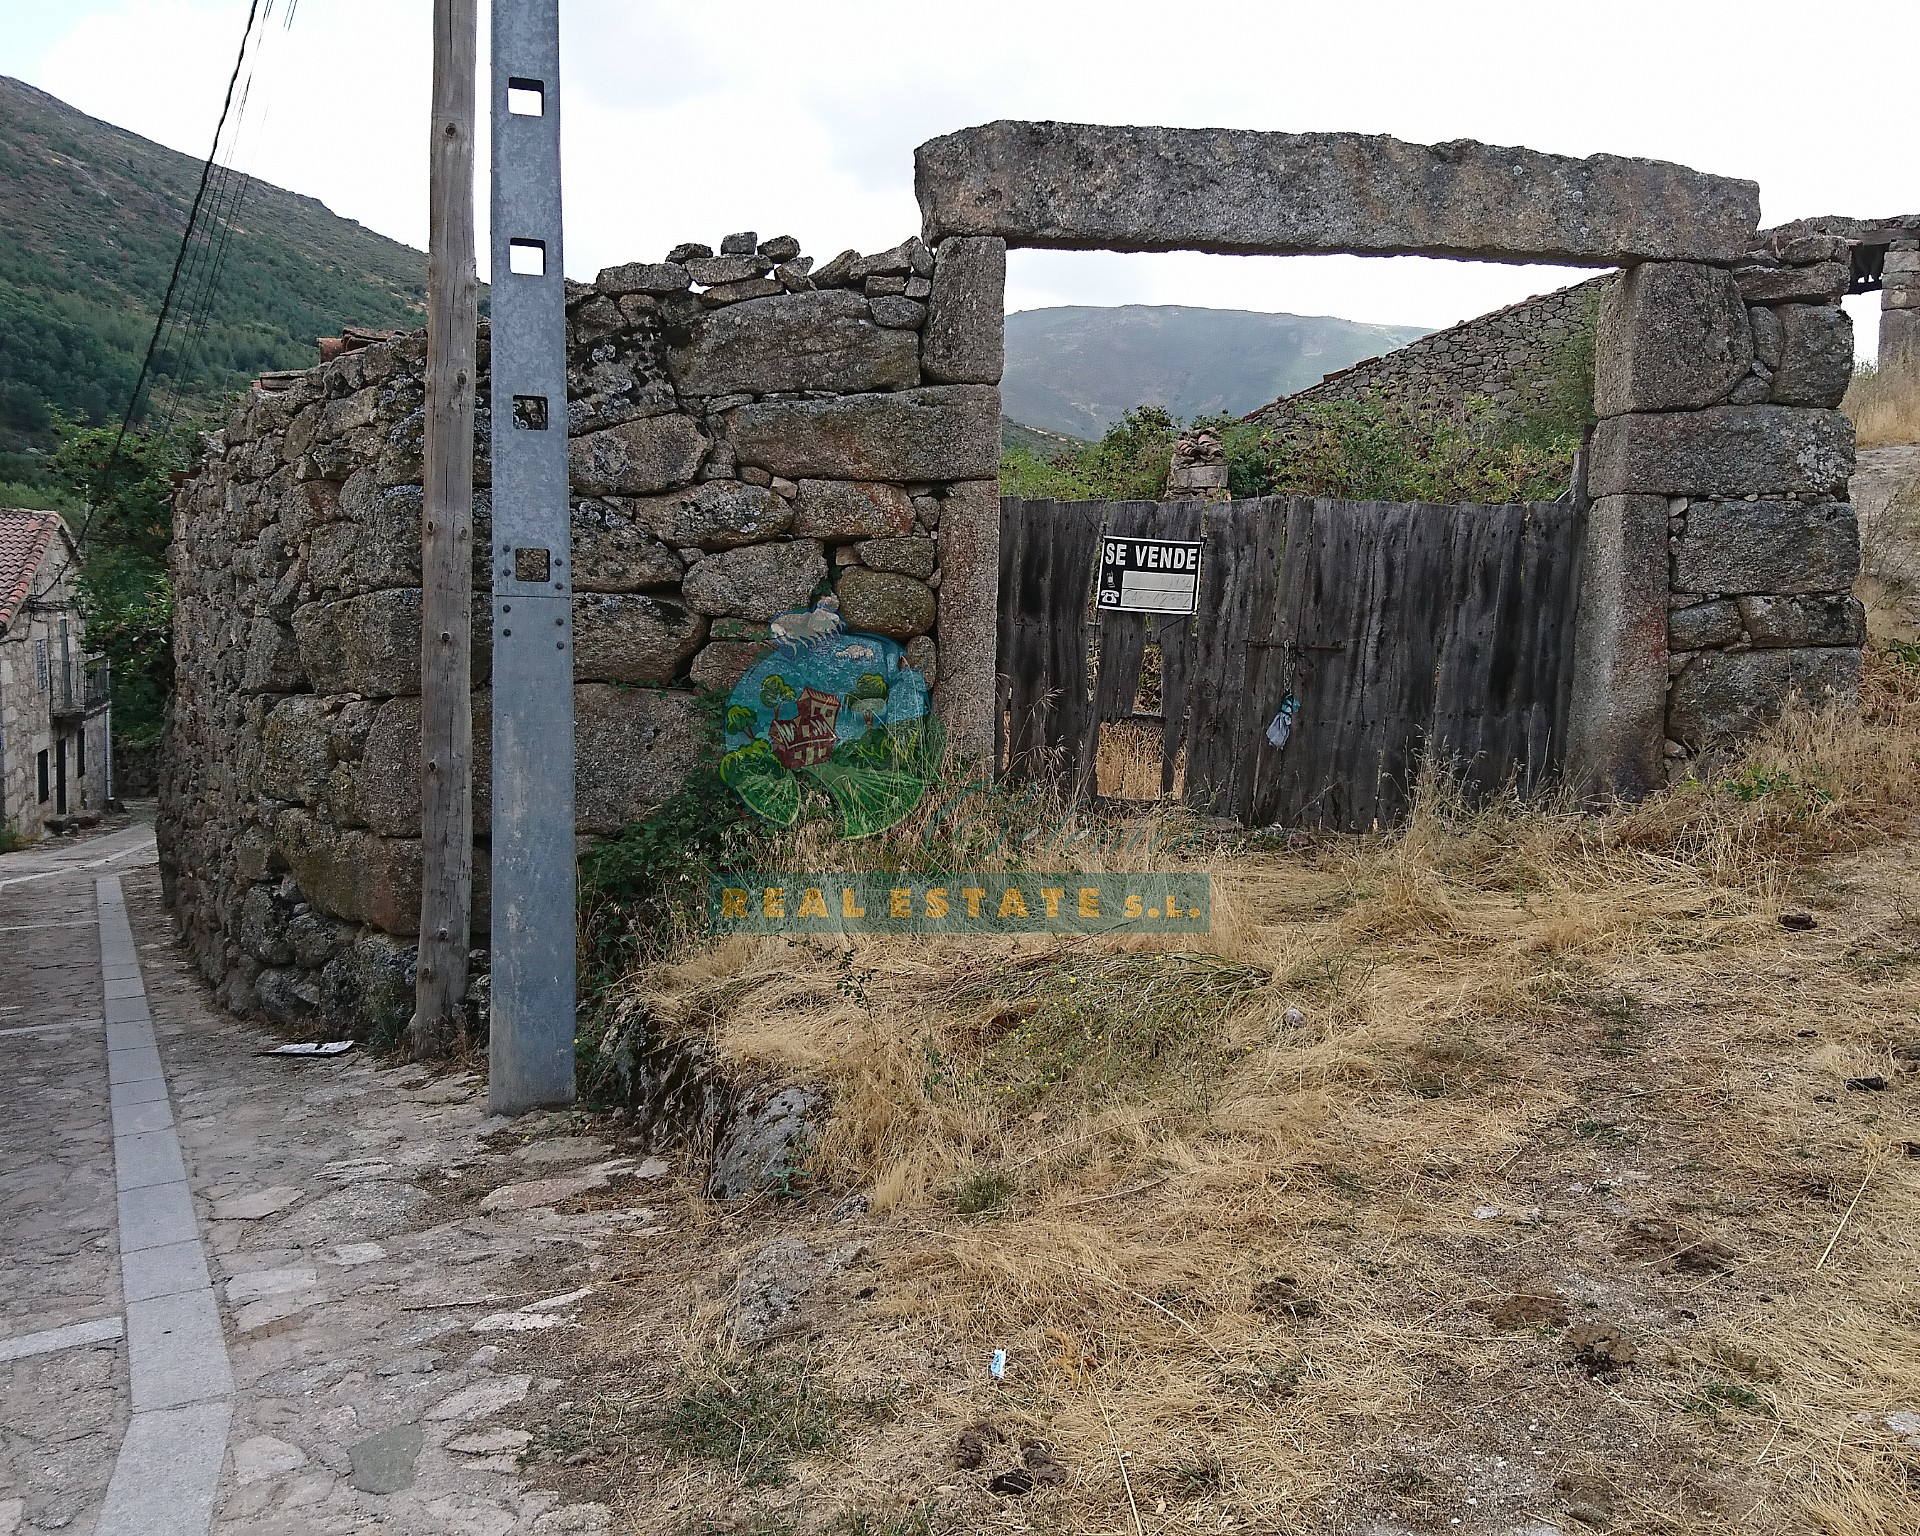 Barn for rehabilitation & stunning views in Sierra de Gredos.